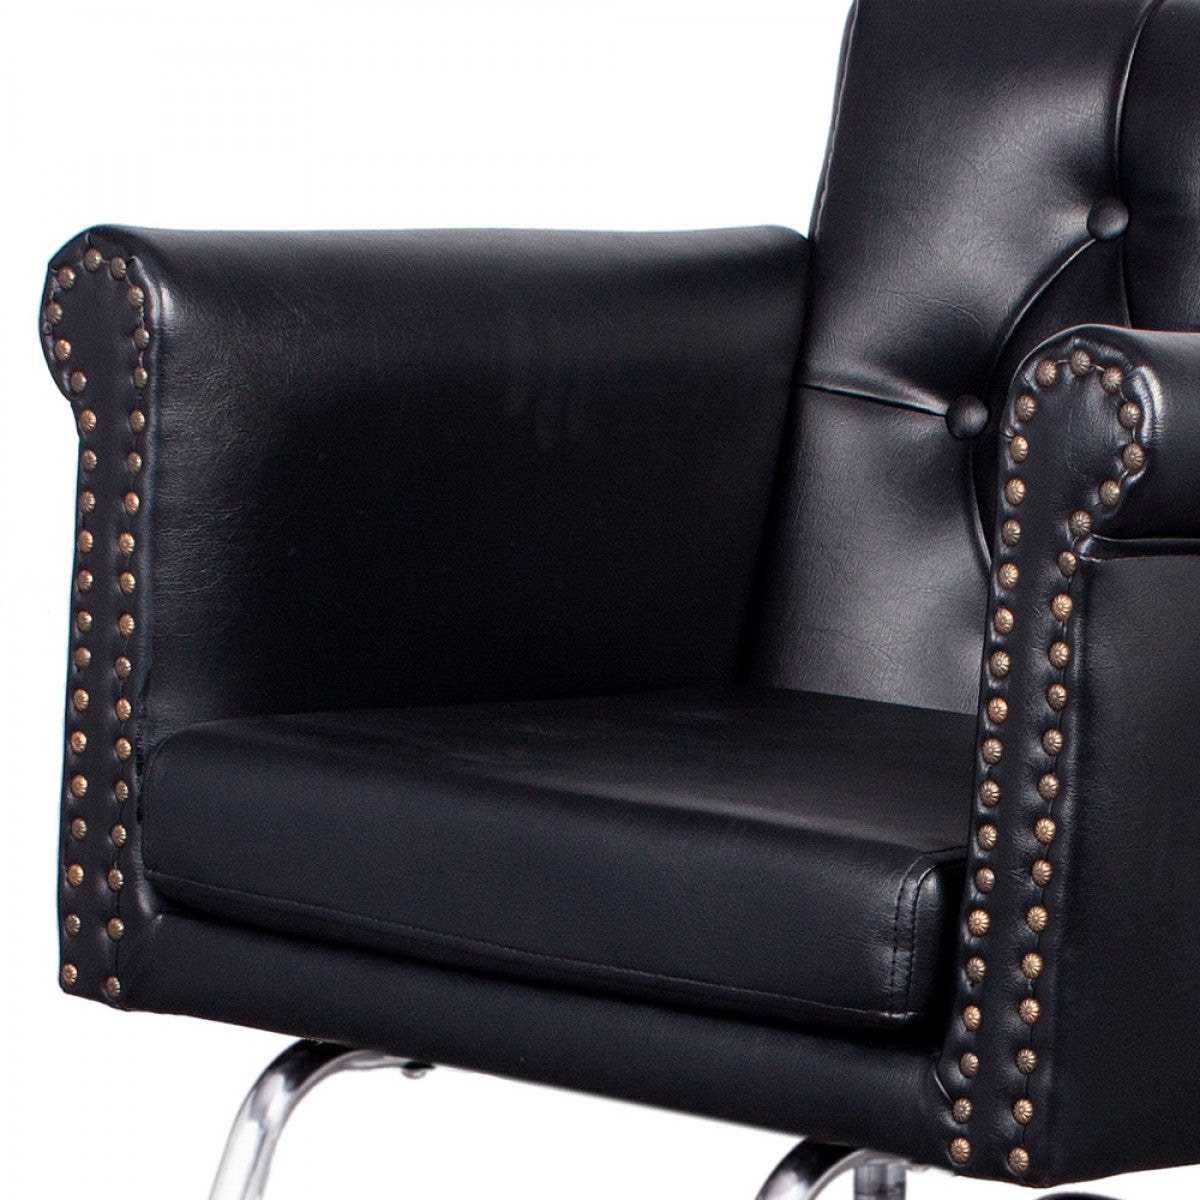 CAPRI Salon Styling Chair